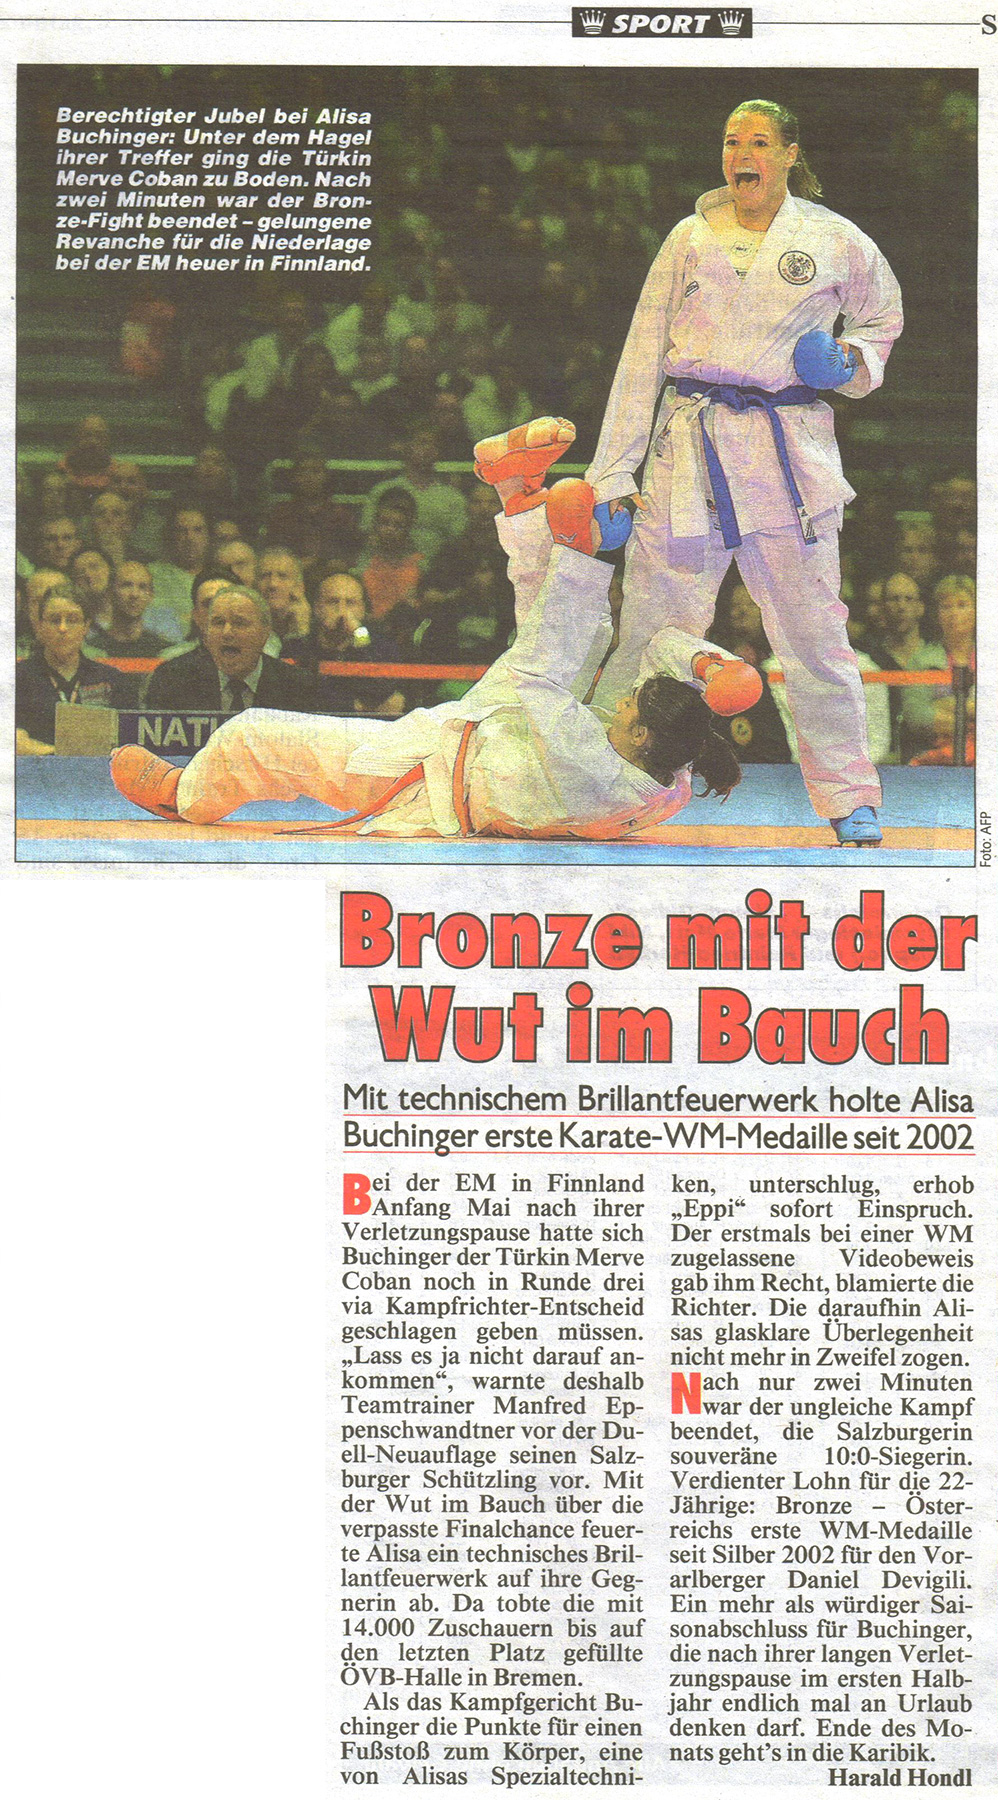 2014-11-09_Krone_WM-Bremen.jpg